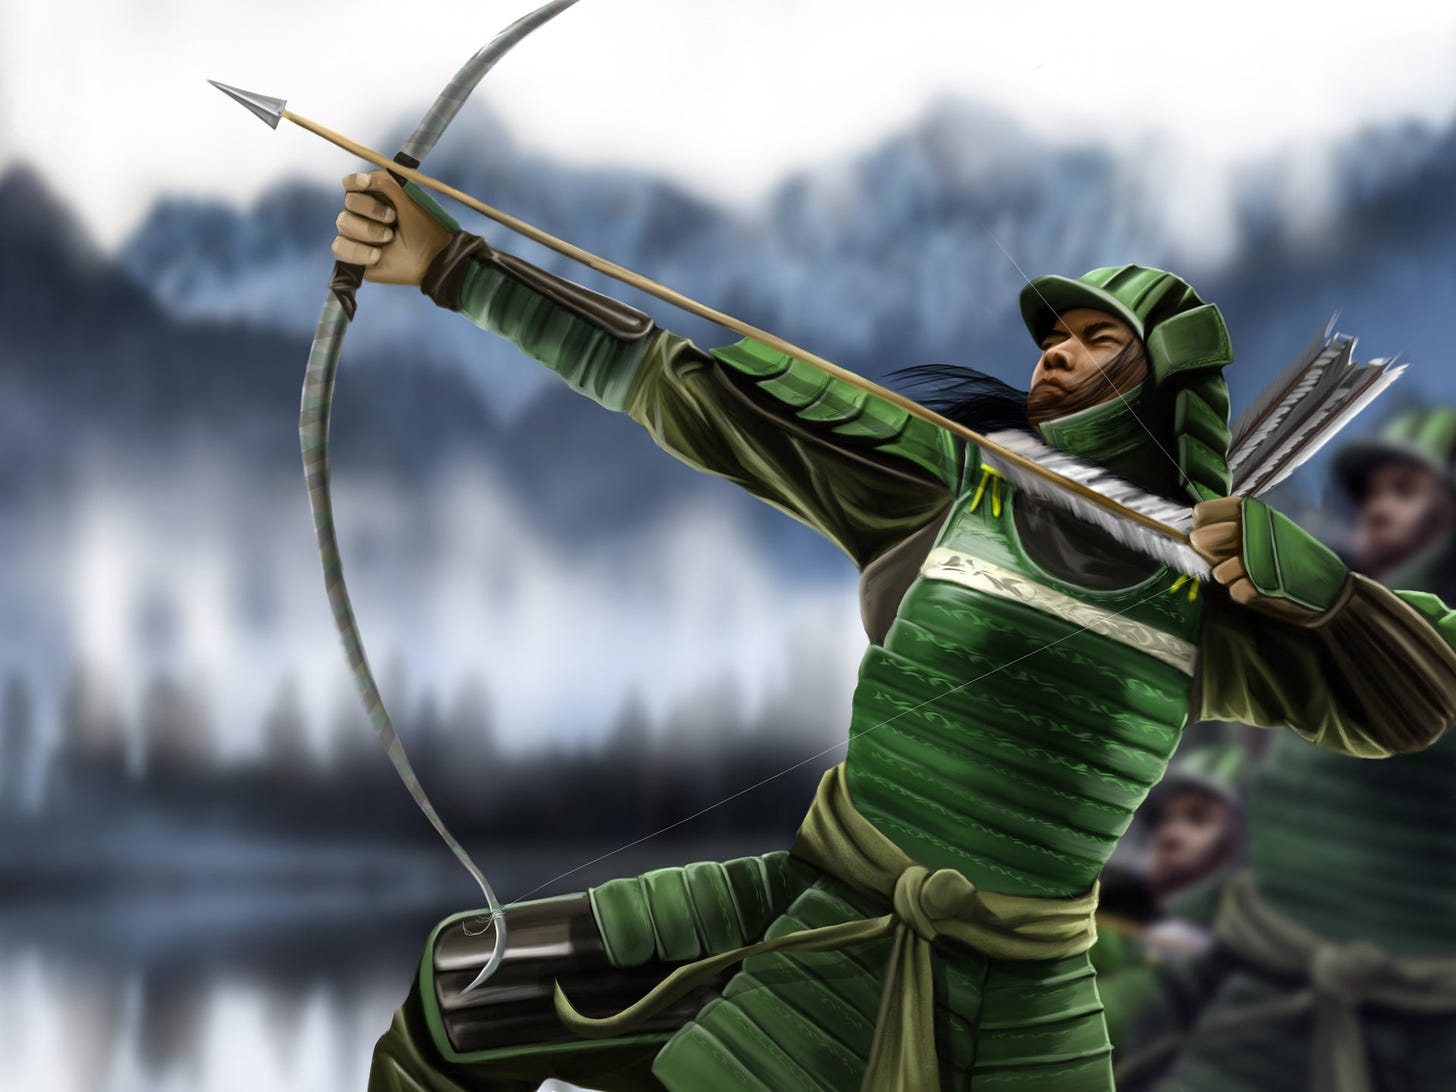 ArtStation - Samurai Archer